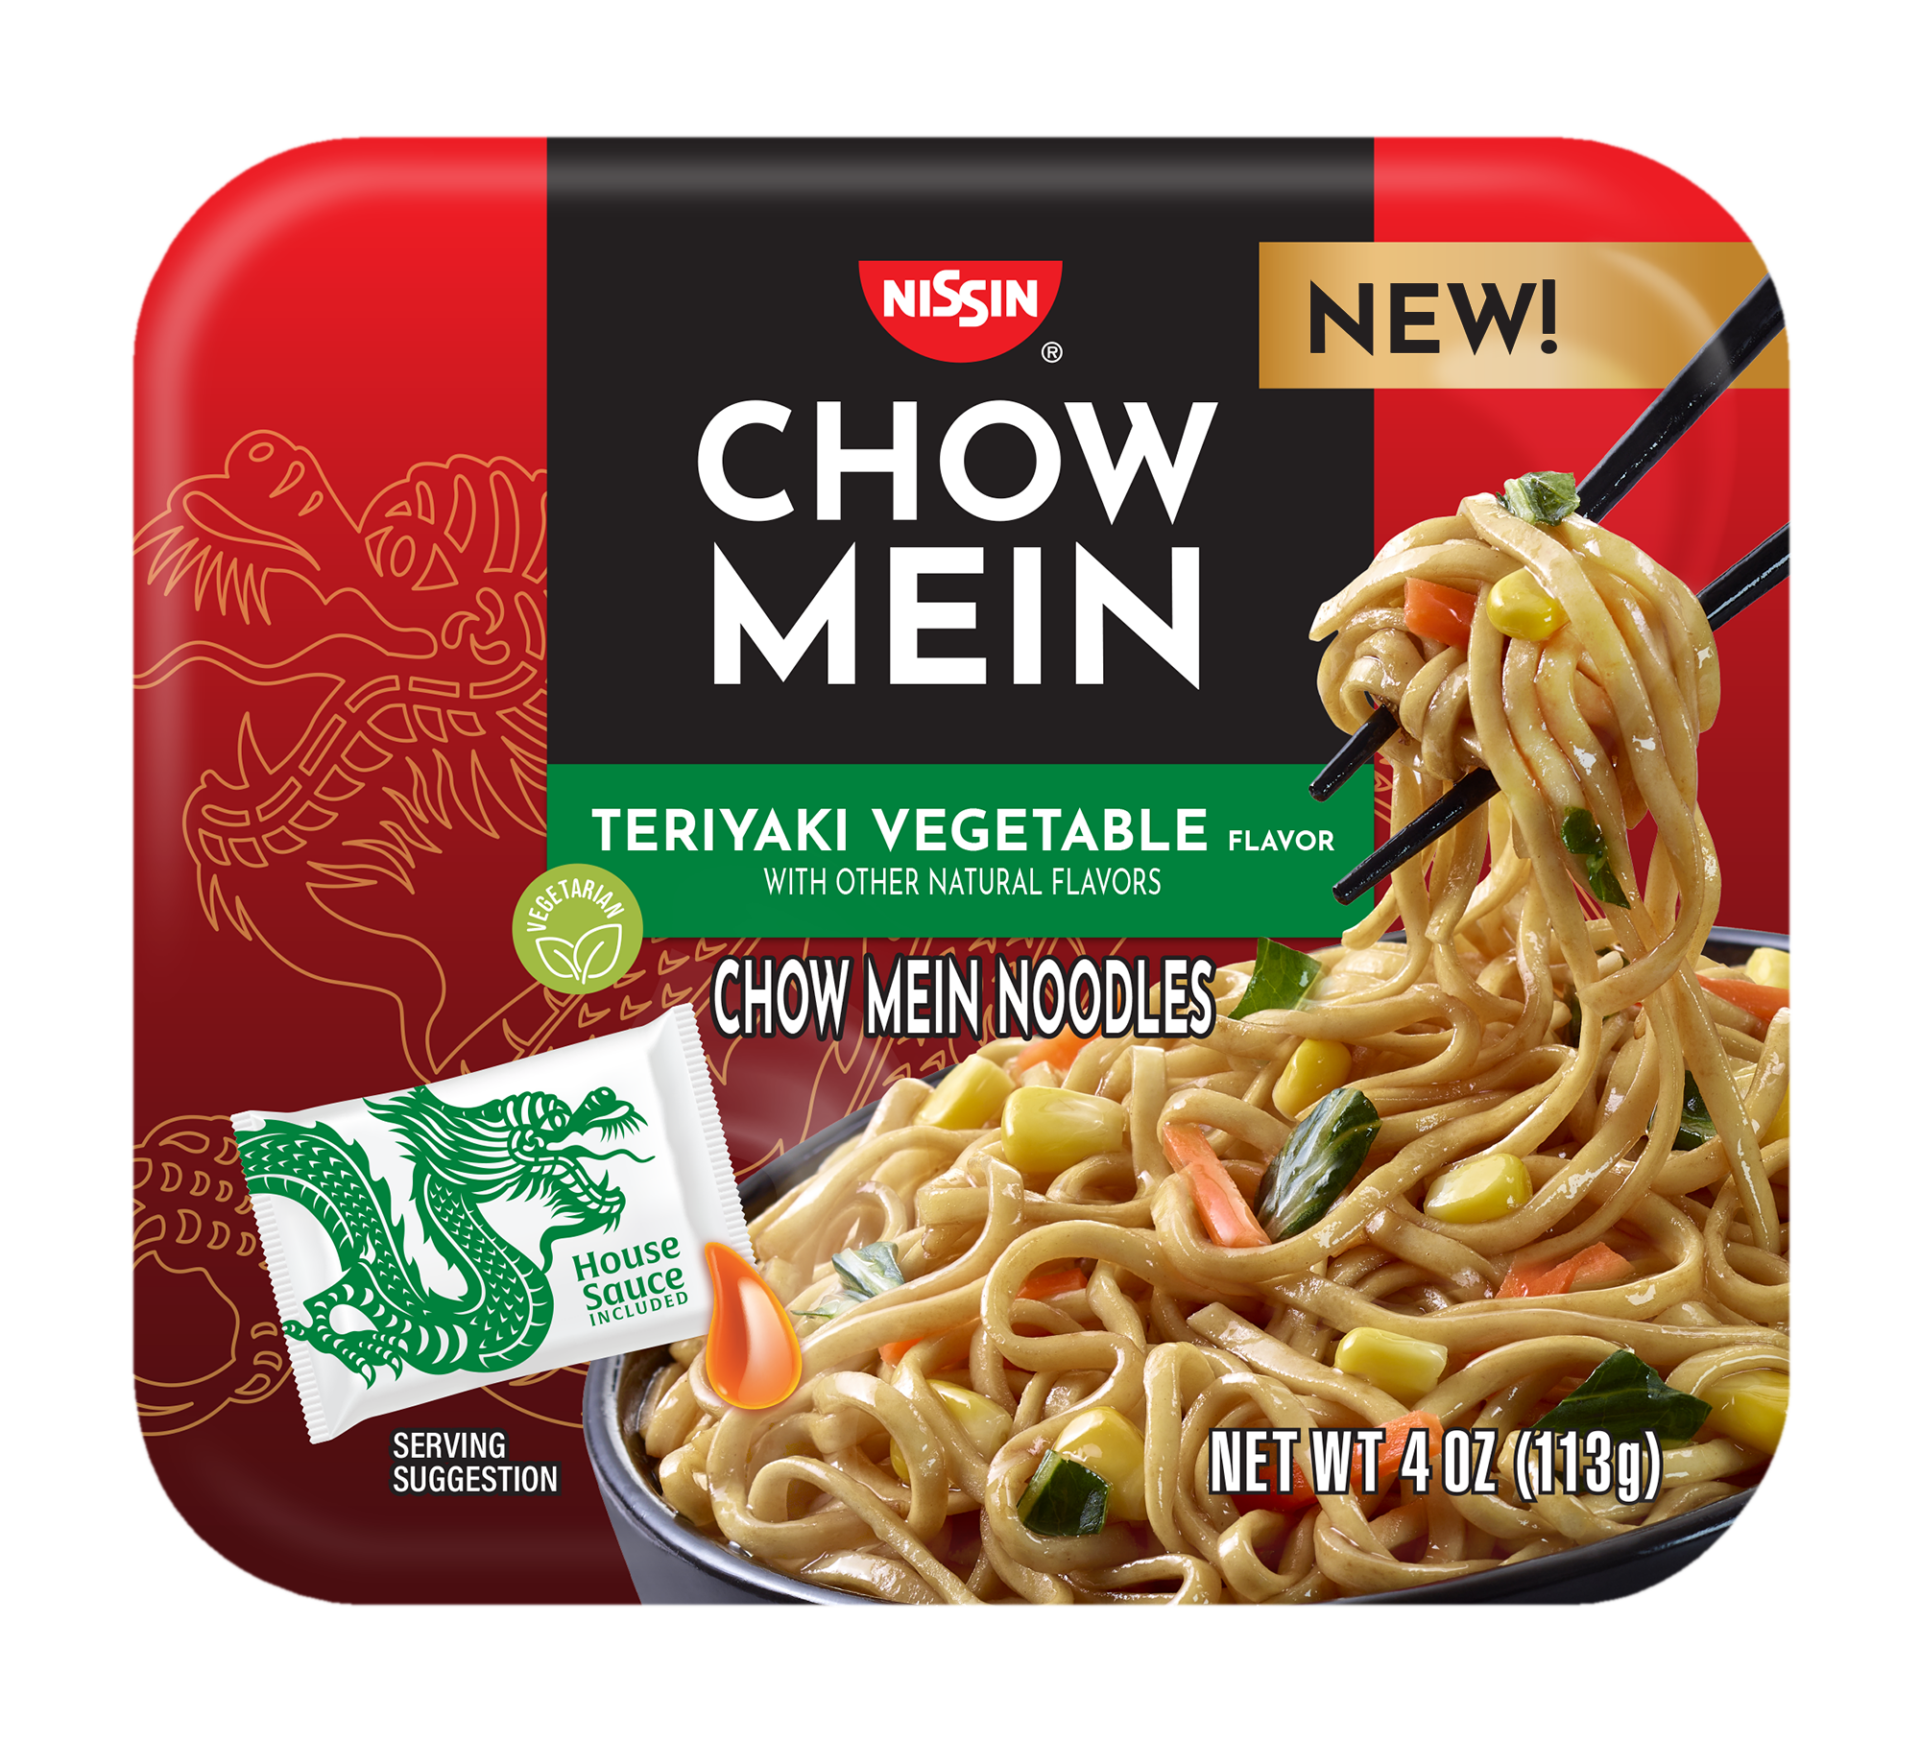 Chow Mein Teriyaki Vegetable